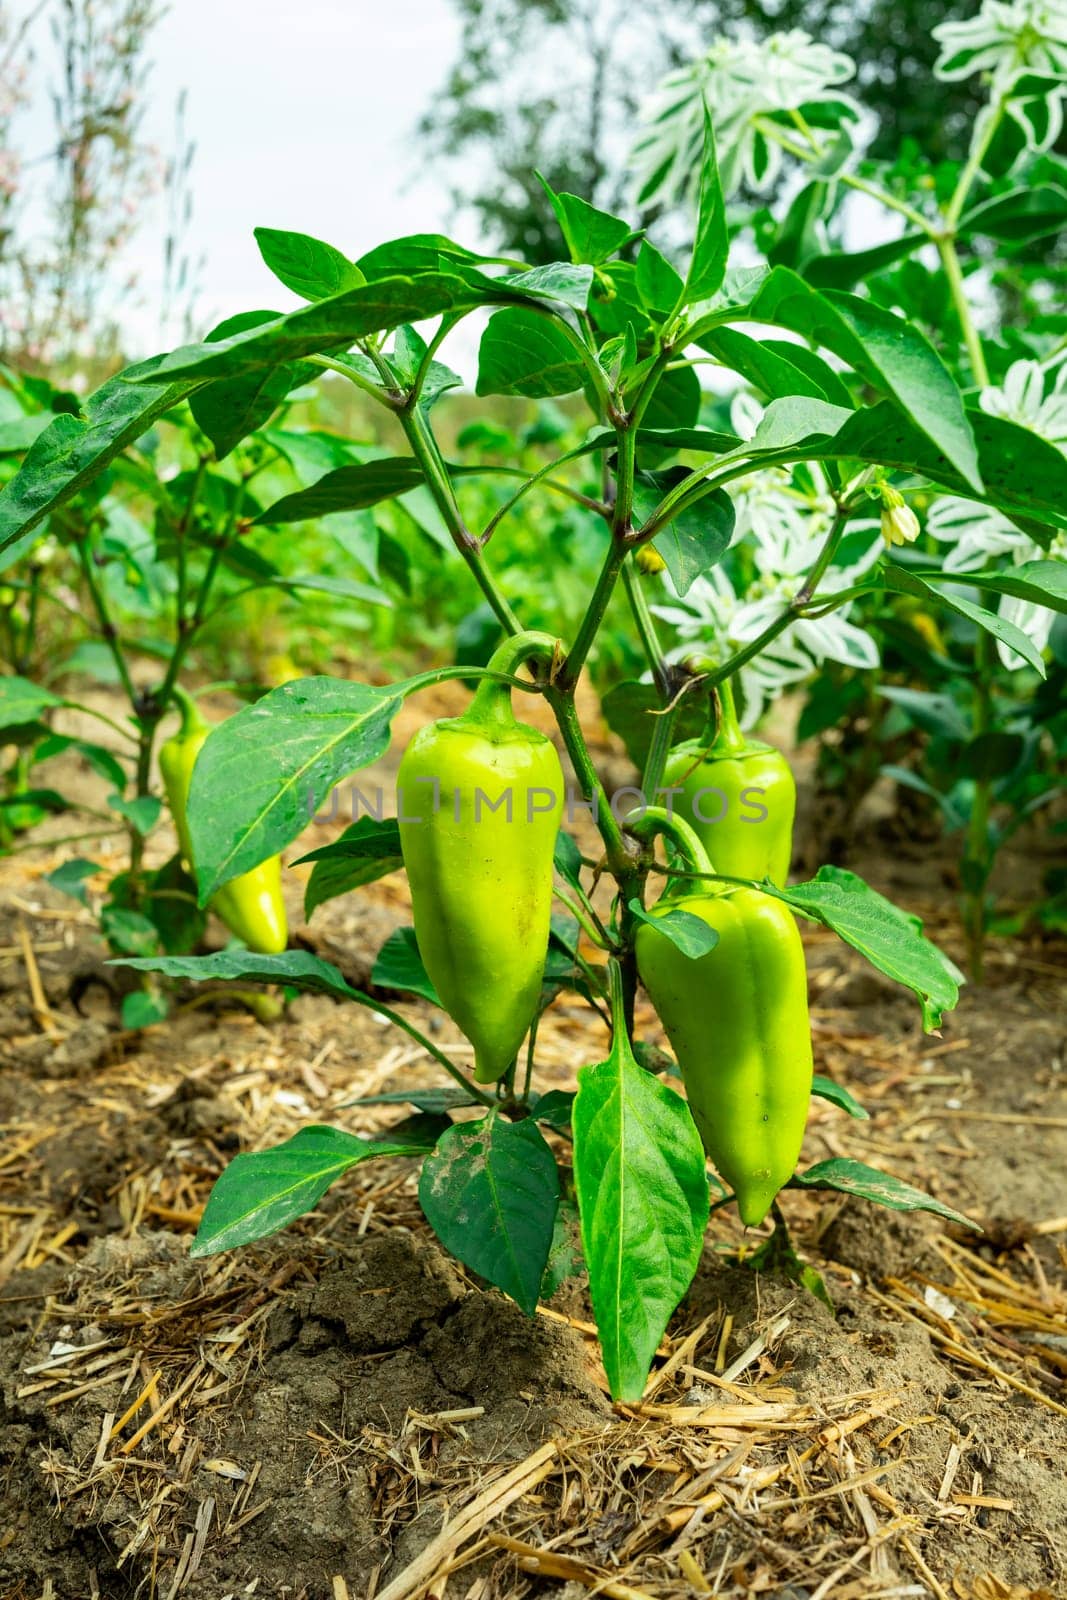 Cultivation of green pepper. Several pepper fruits on a green bush by Serhii_Voroshchuk